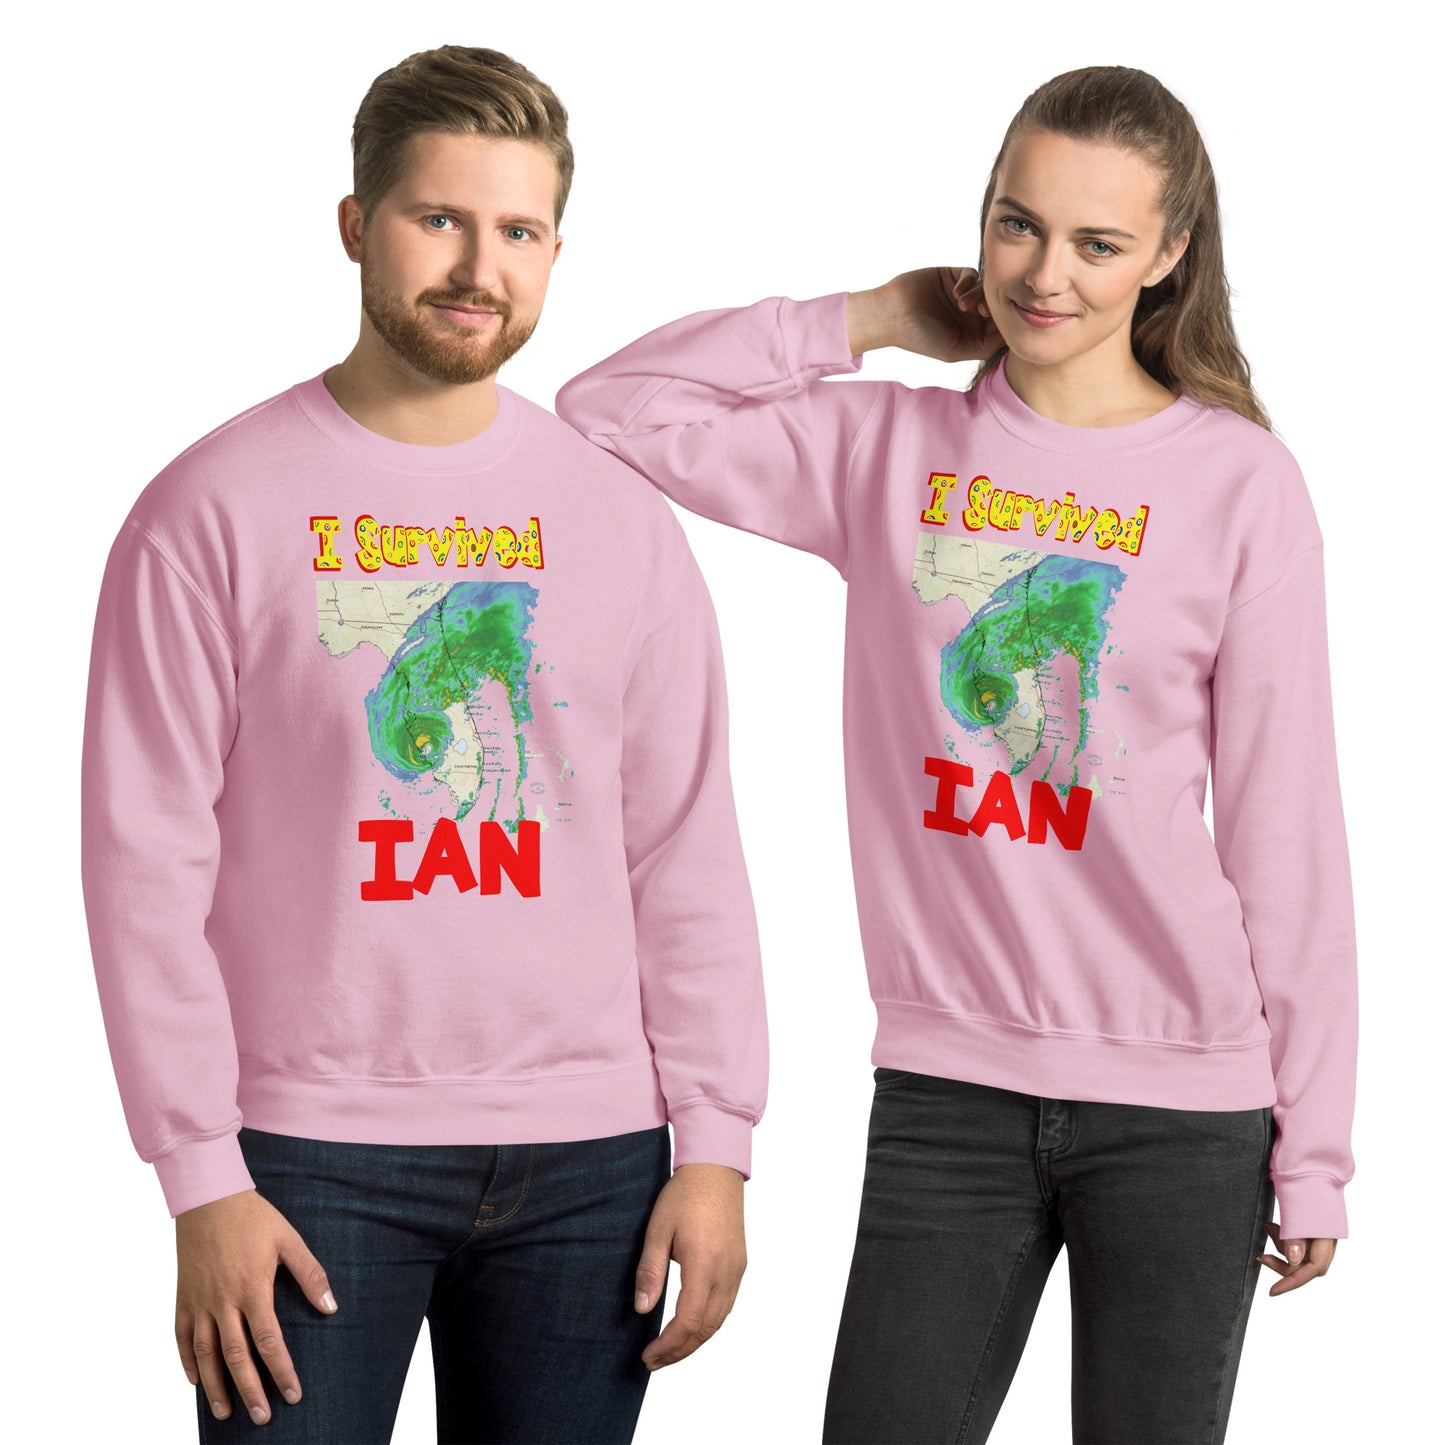 "I Survived Hurricane Ian" with Hurricane Styled Text Unisex Sweatshirt